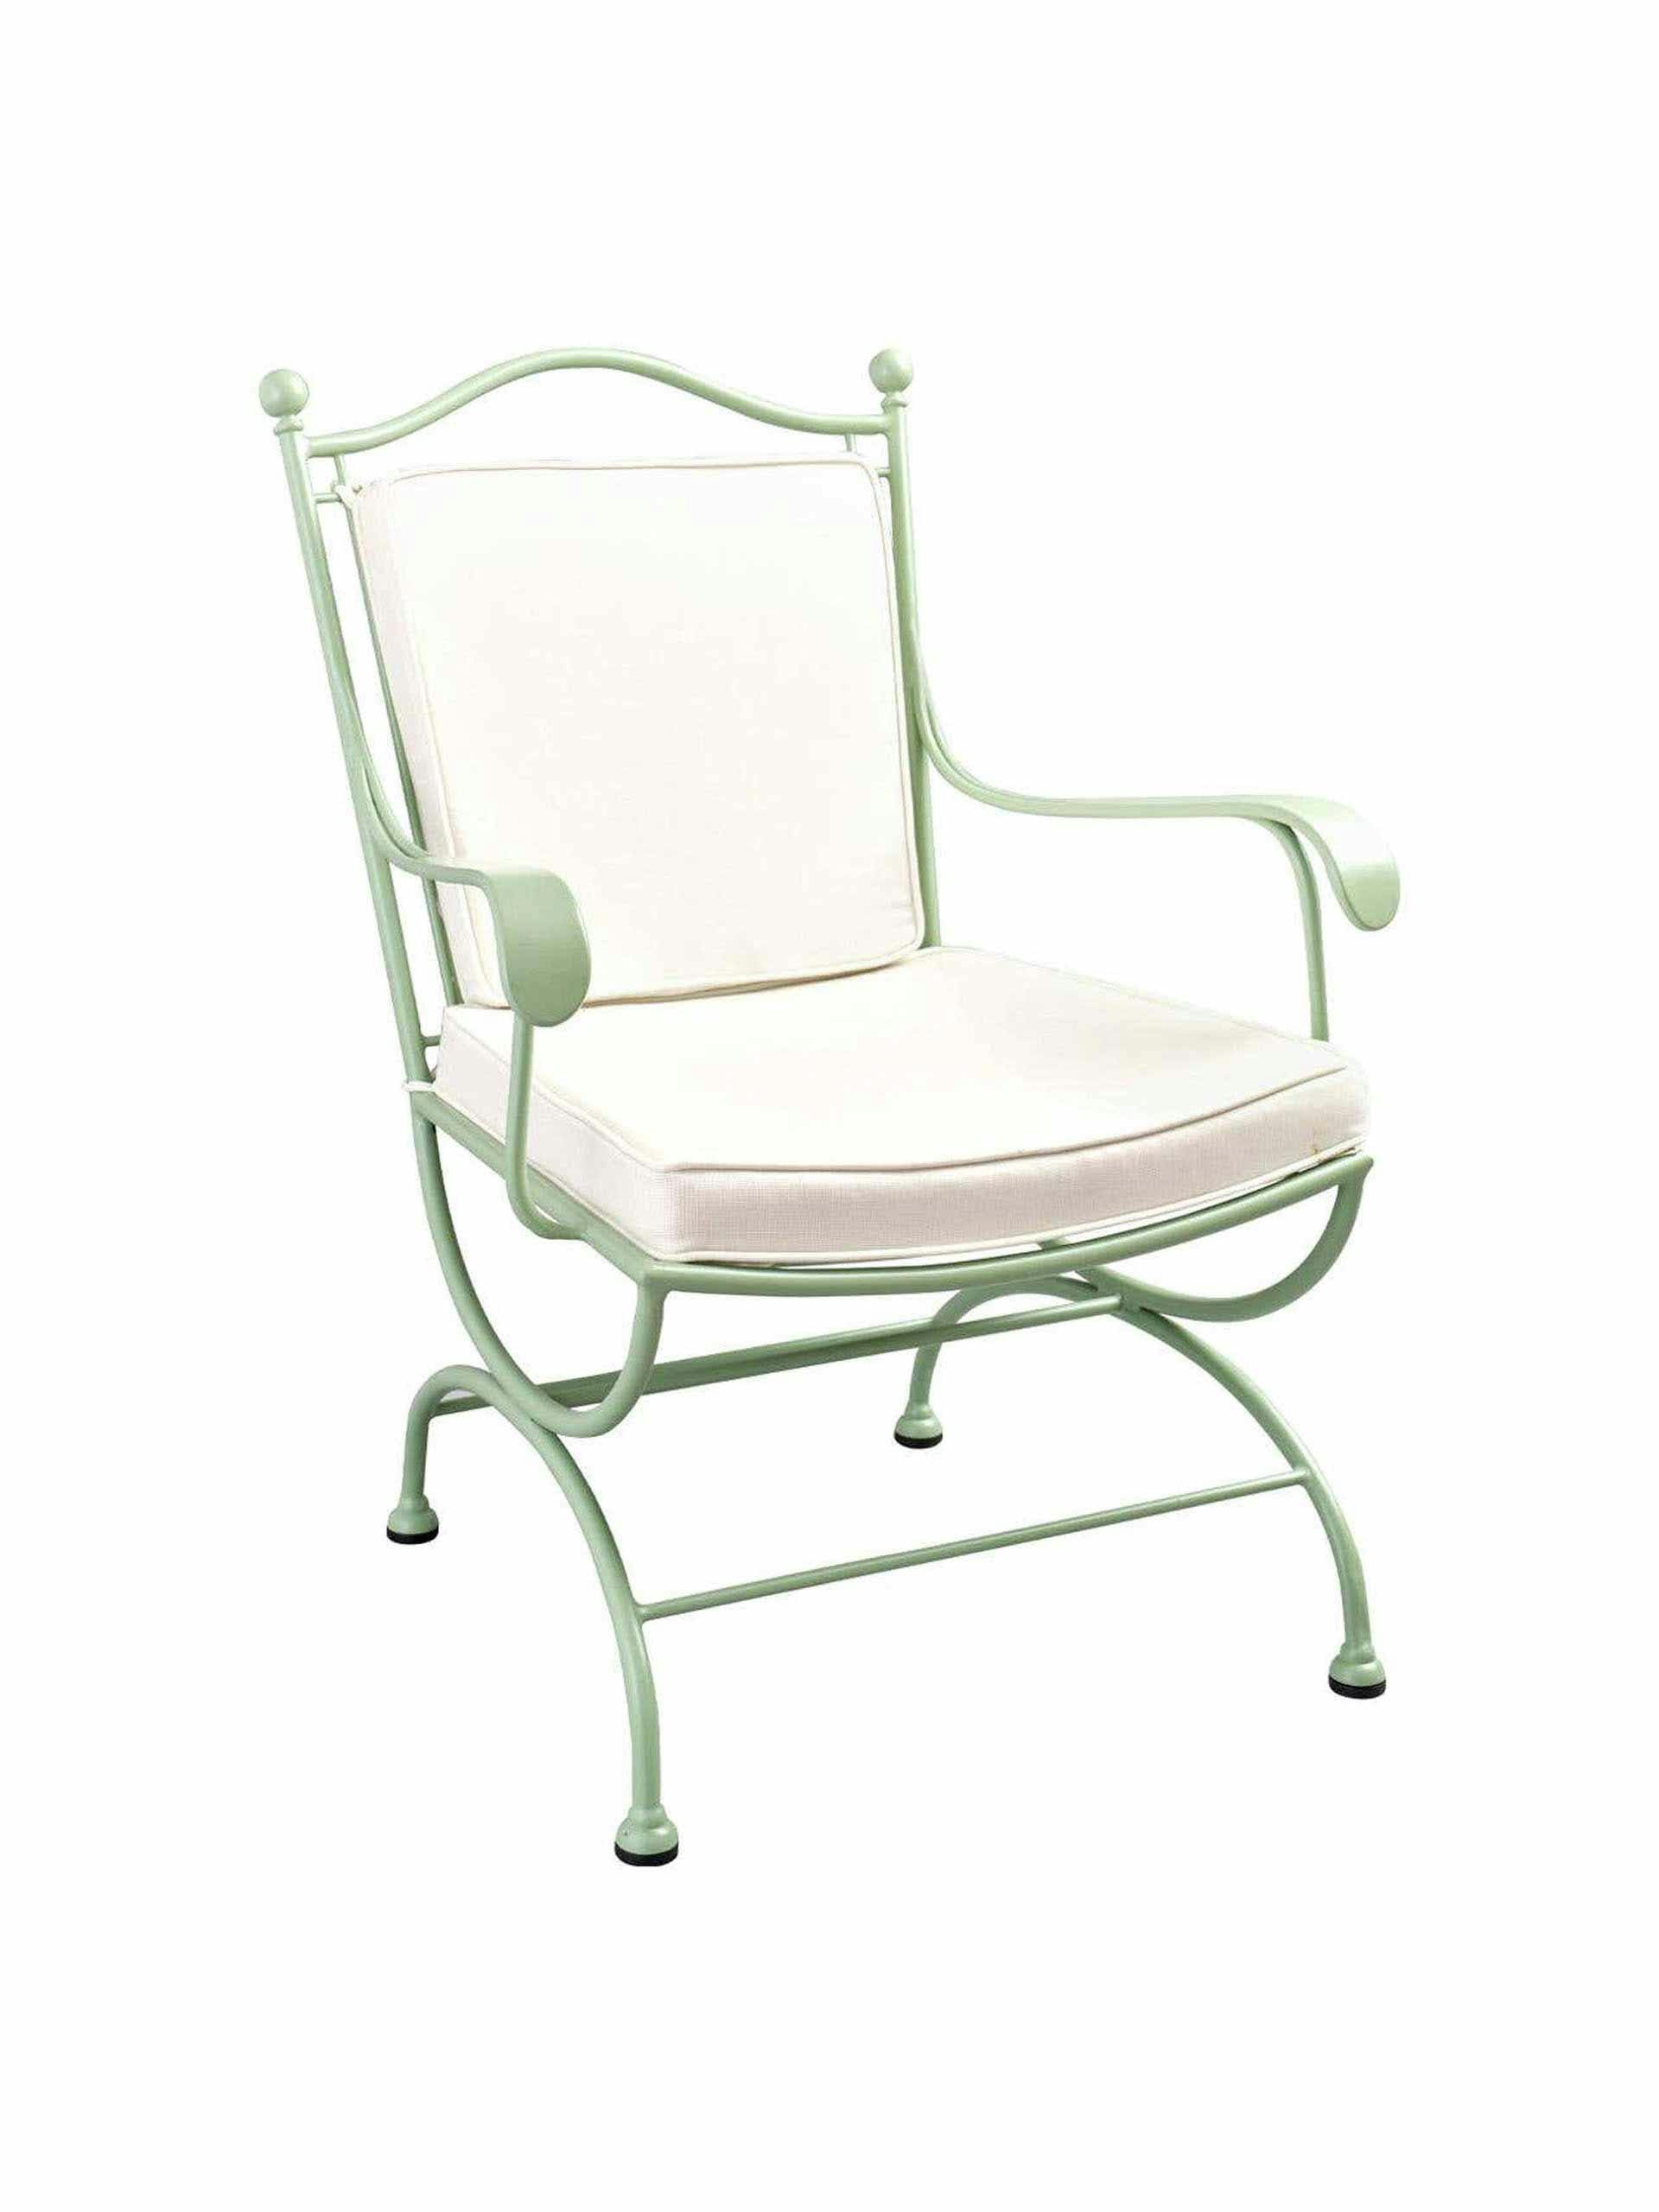 Green outdoor chair